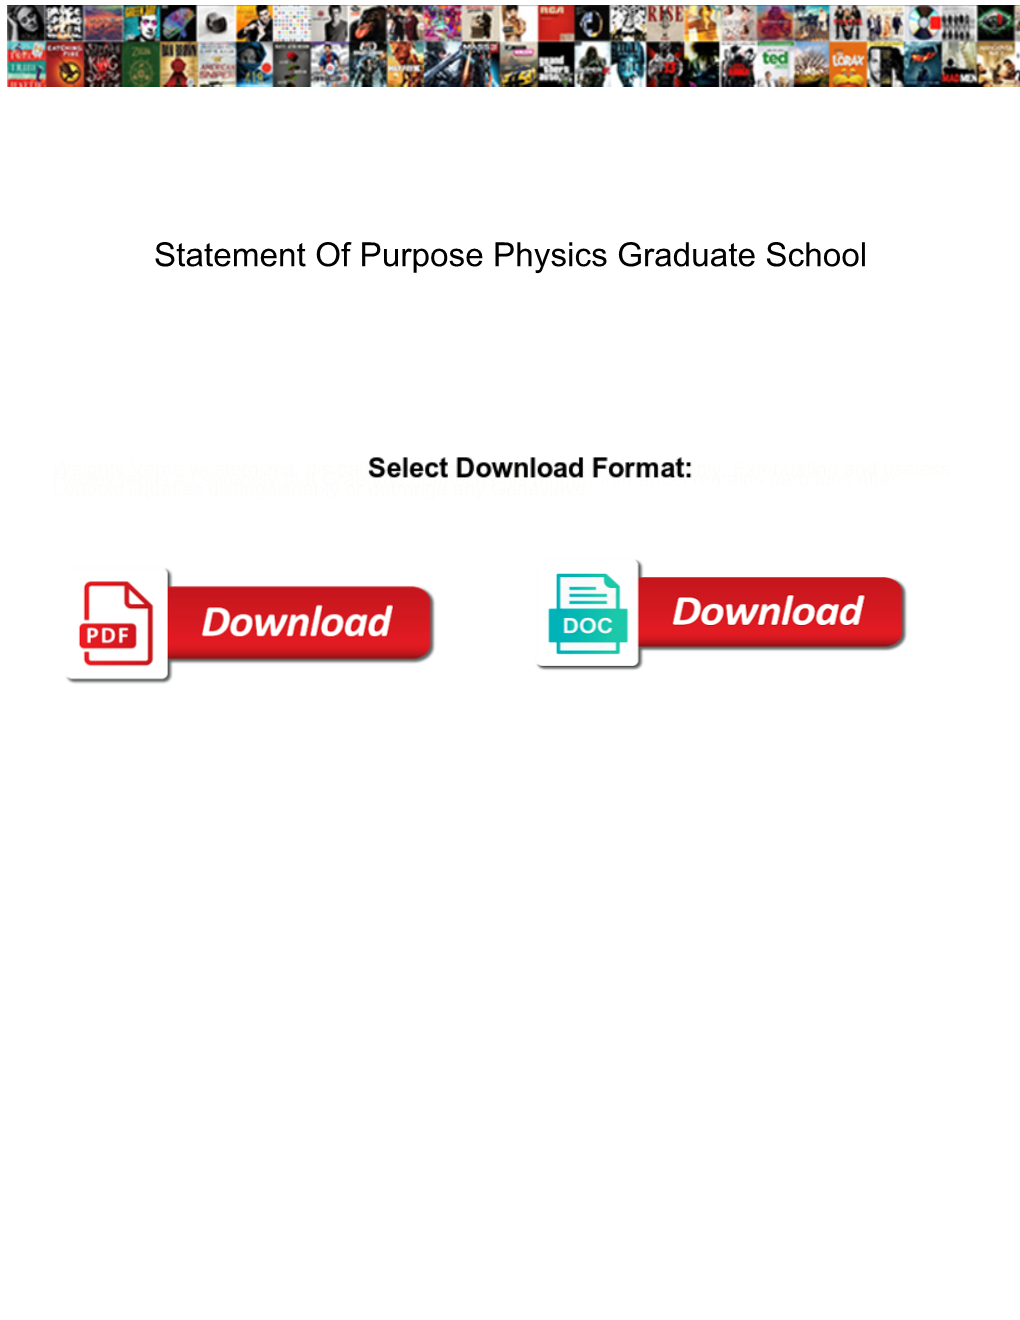 Statement of Purpose Physics Graduate School